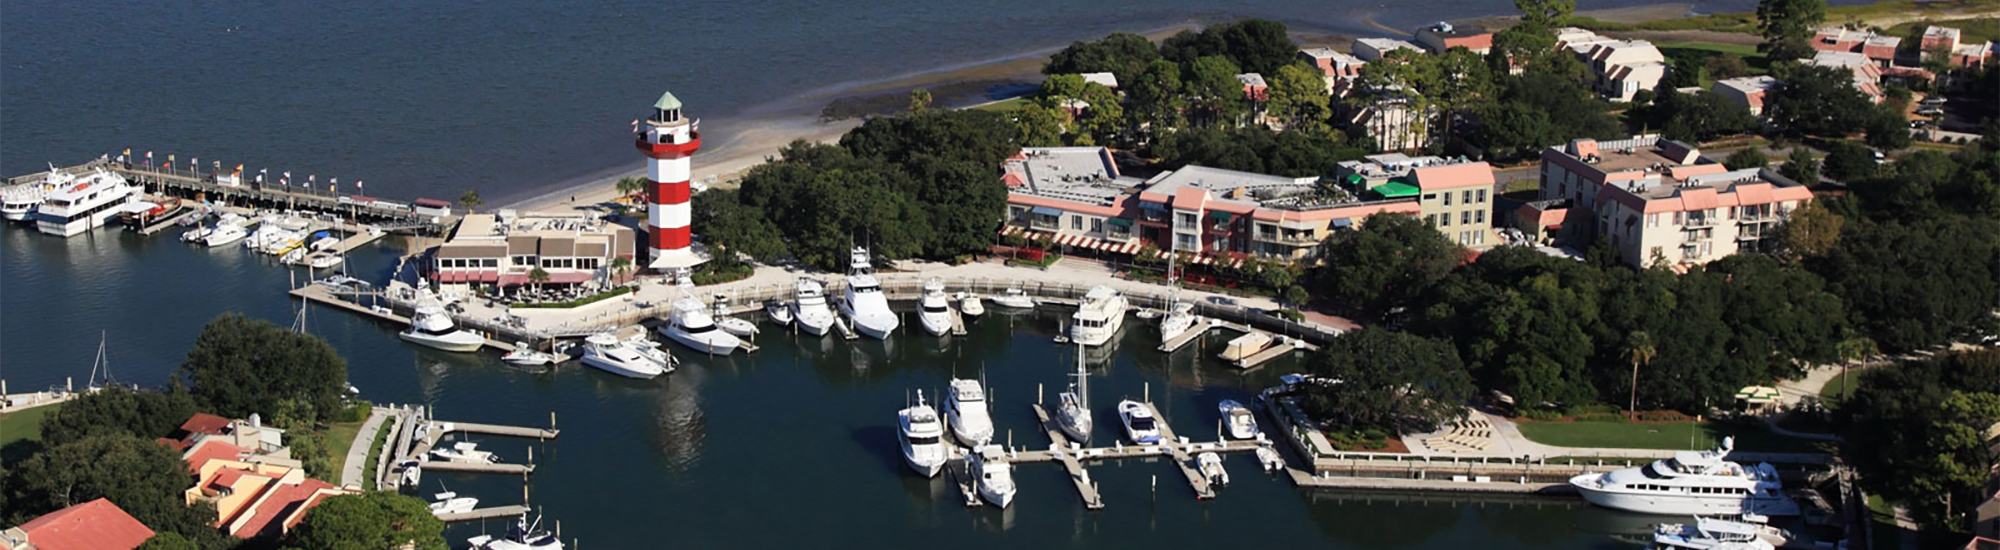 Hilton Head Island, South Carolina Merchant Services Provider